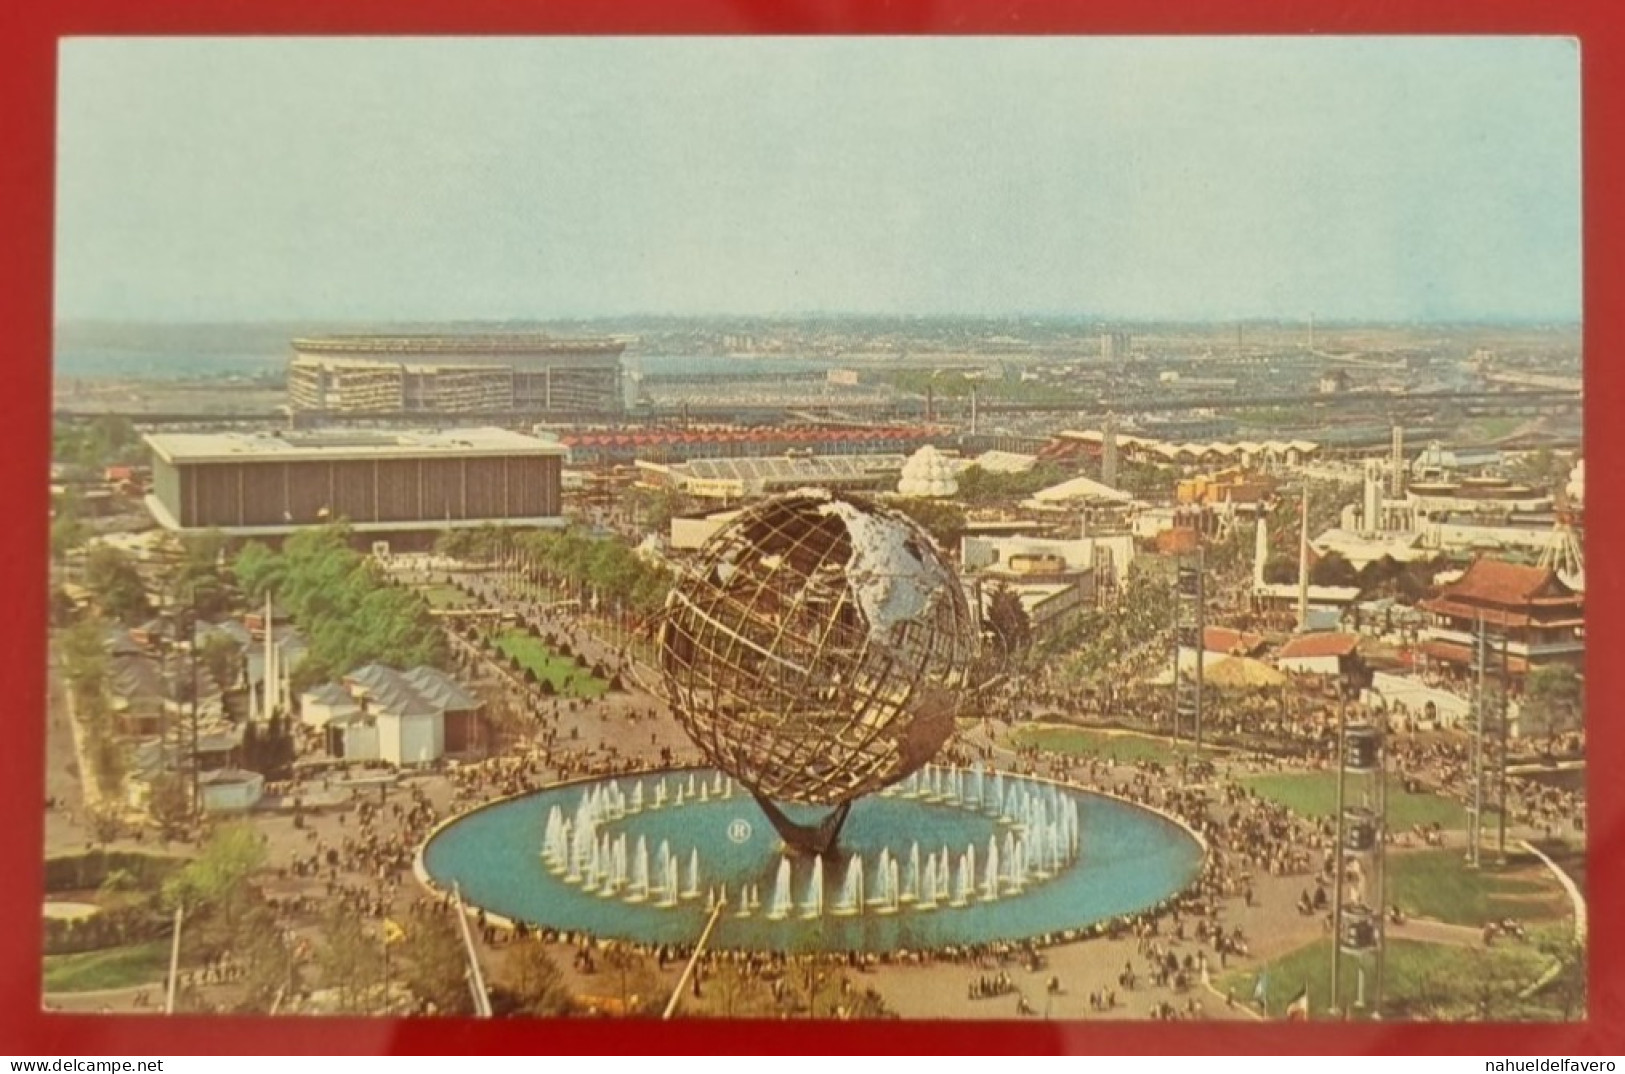 Uncirculated Postcard - USA - NY, NEW YORK WORLD'S FAIR 1964-65 - UNISPHERE - Tentoonstellingen